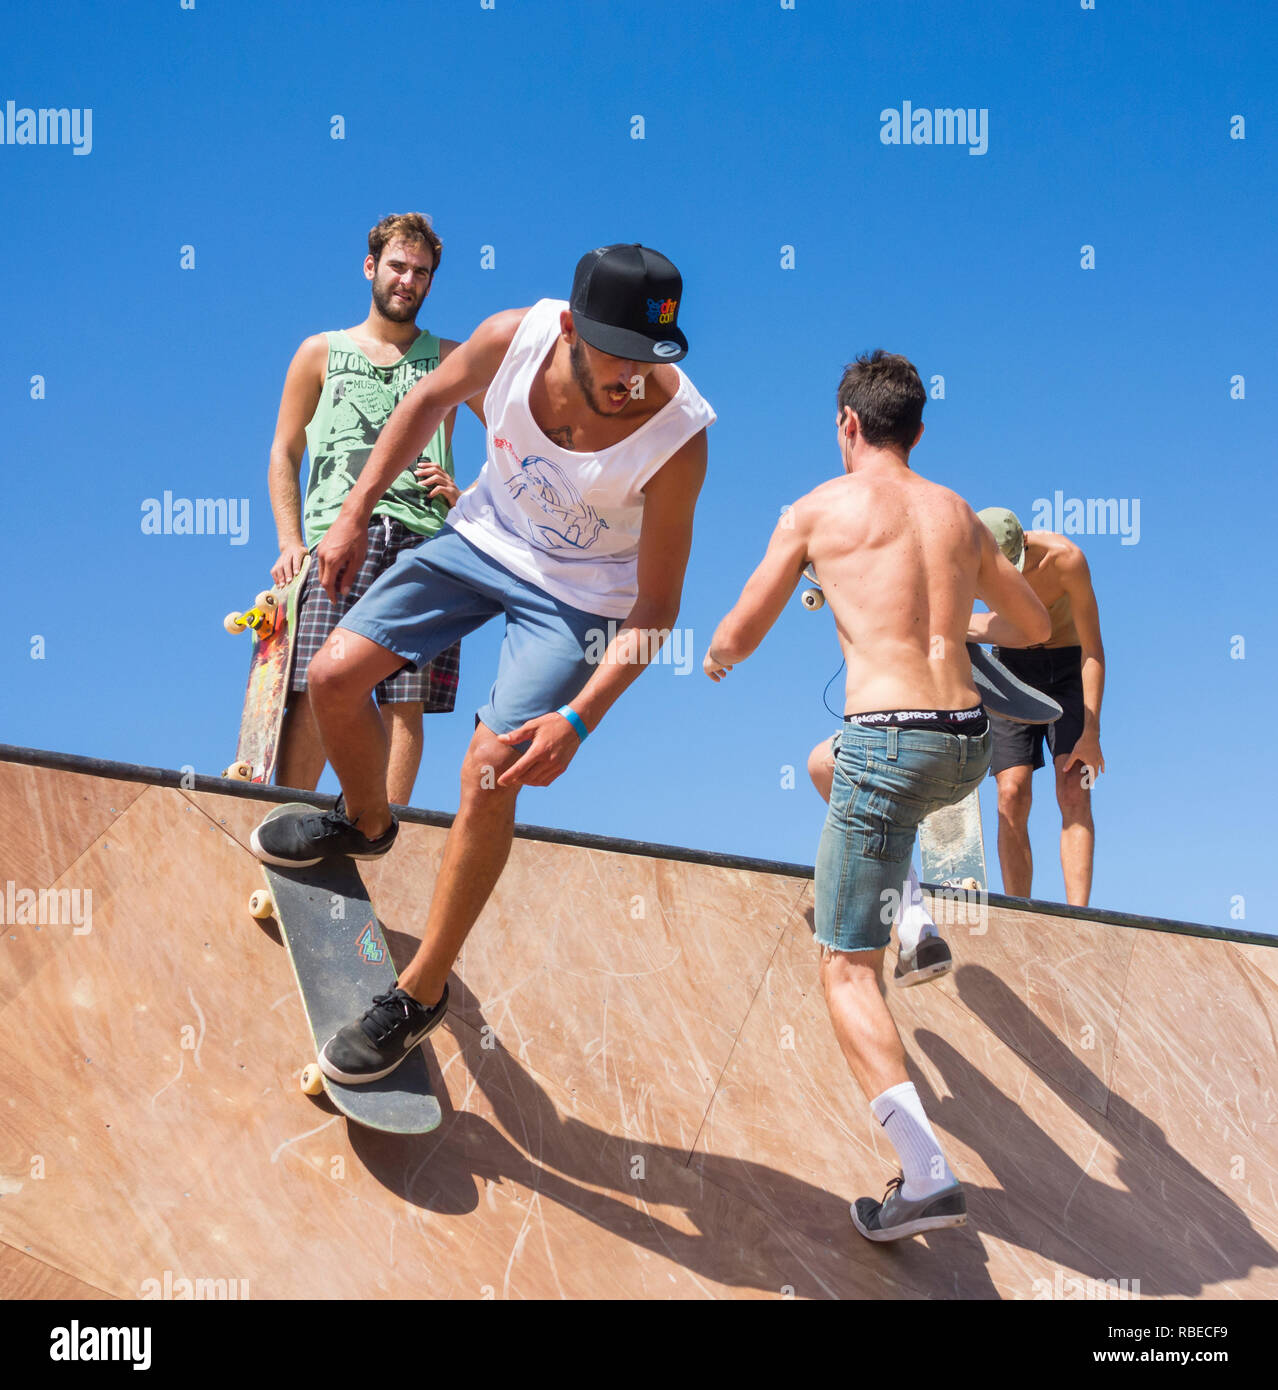 Sur la rampe de skate skateur en skatepark. Banque D'Images